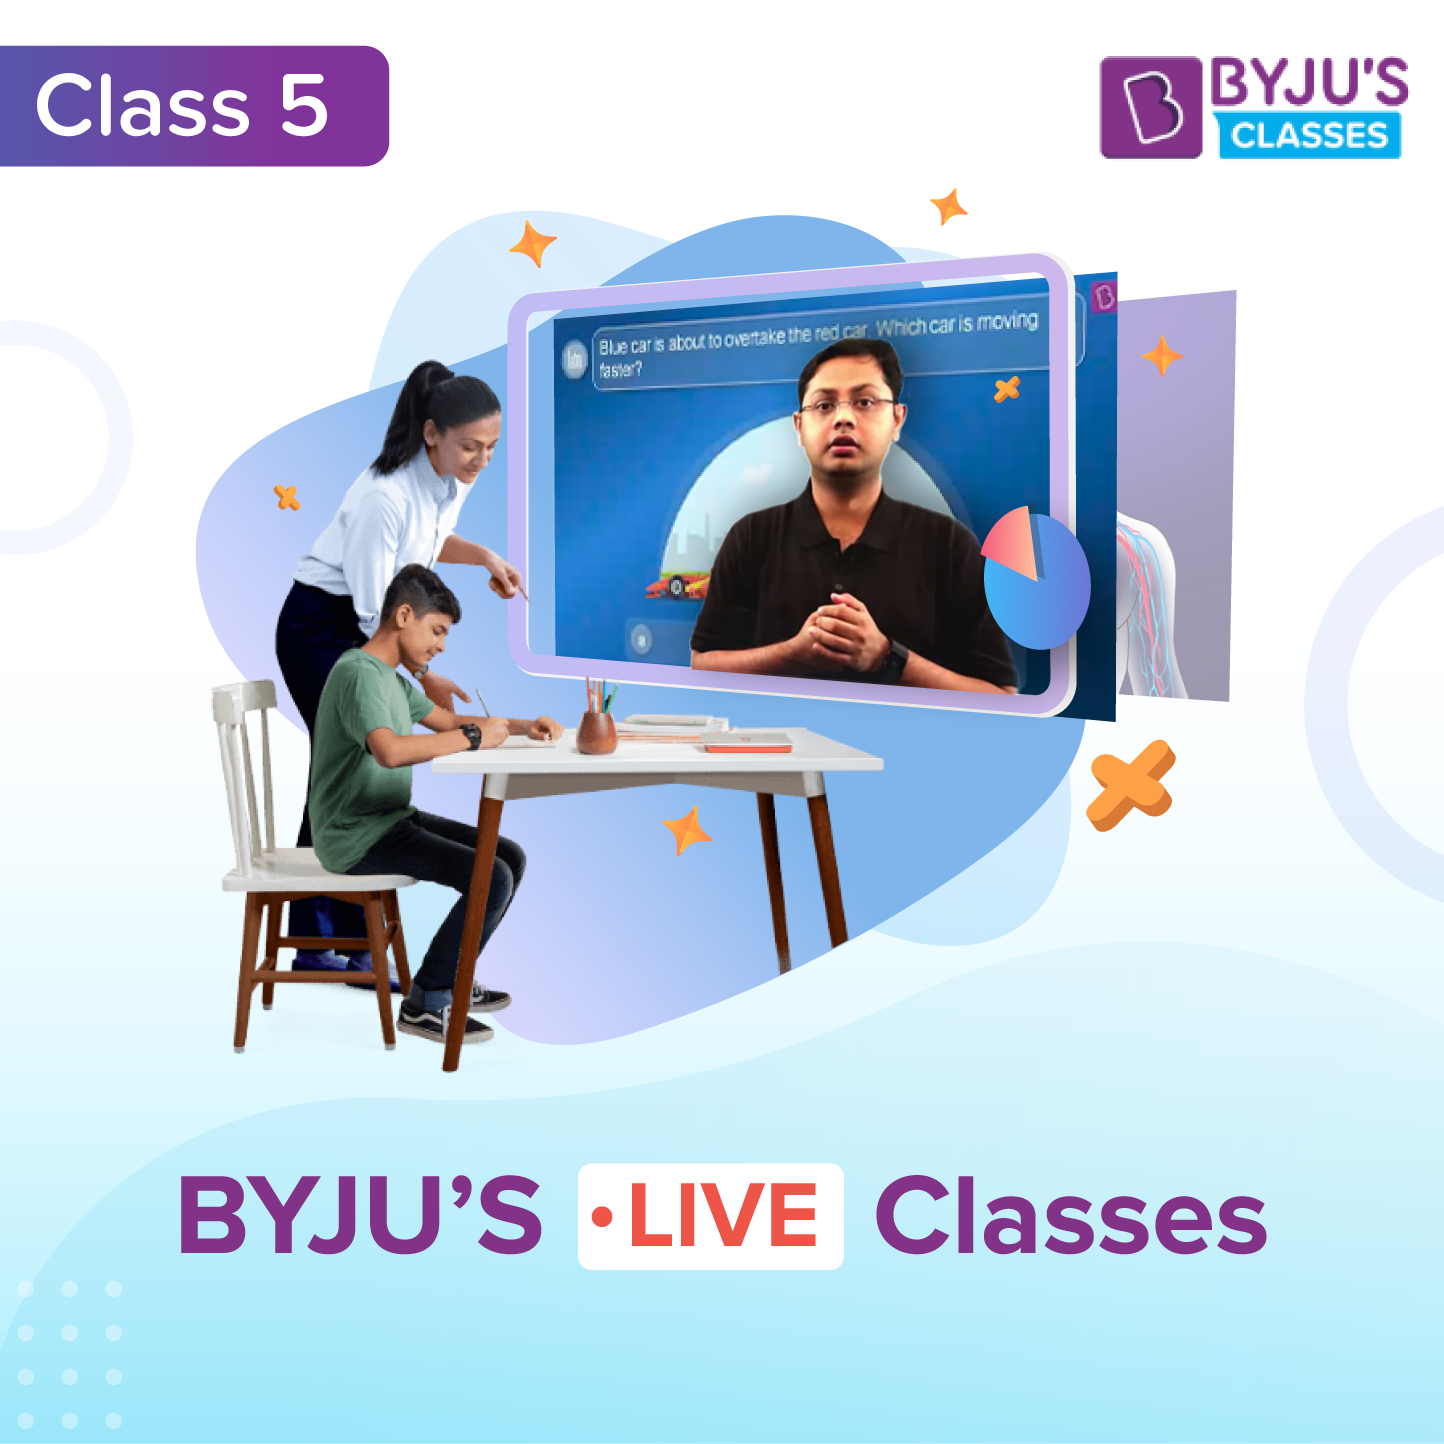 BYJU'S Live Classes - Class 5